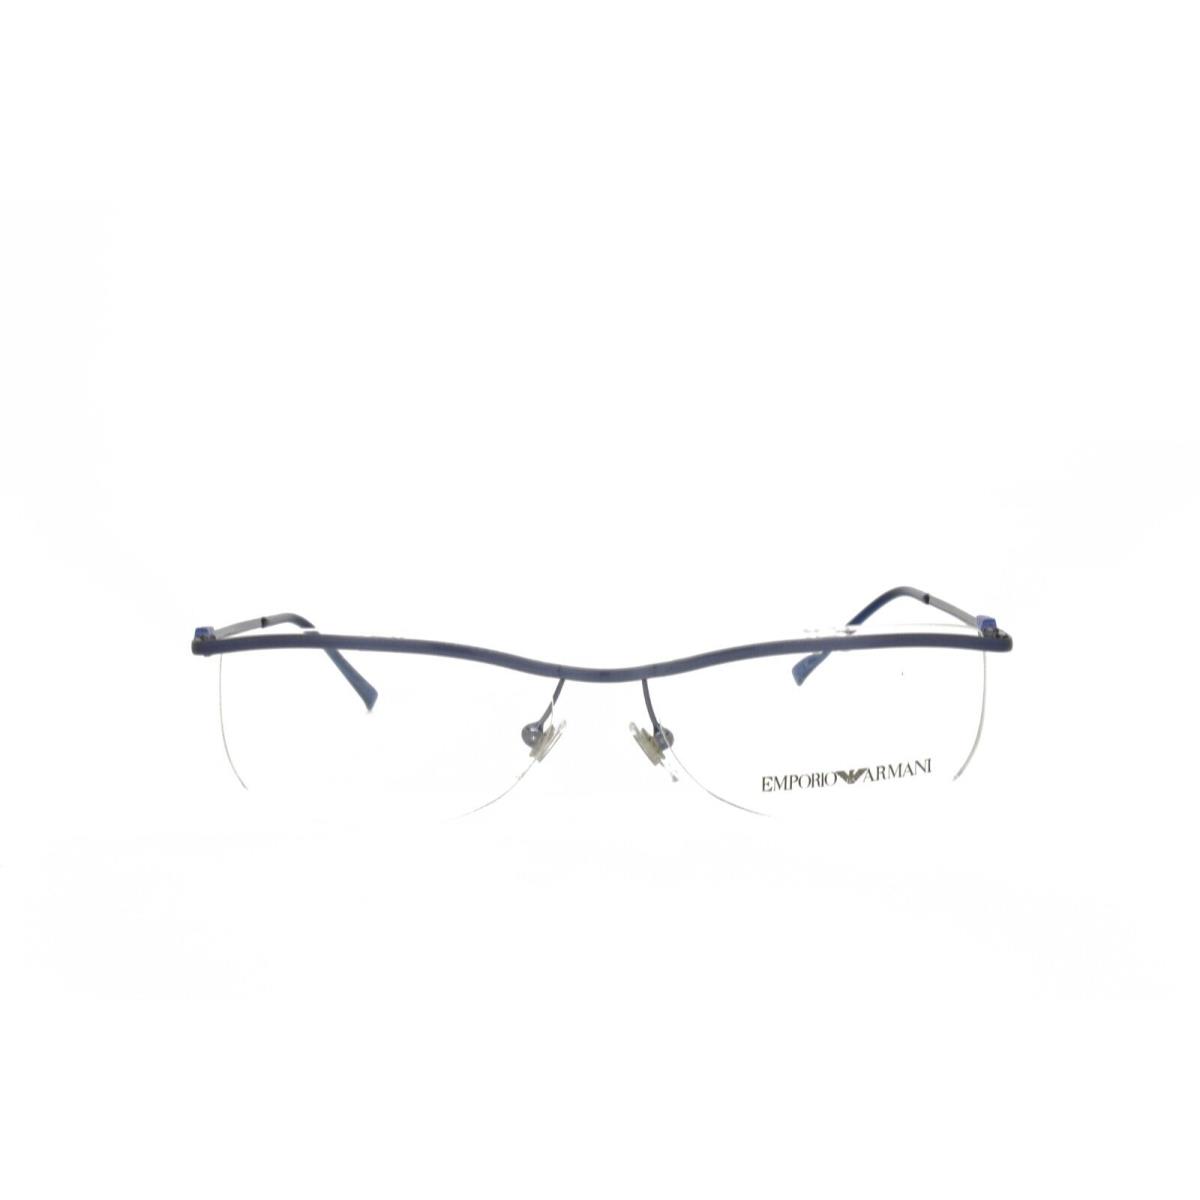 Emporio Armani 228 1377 52-16-135 Blue Eyeglasses Frames